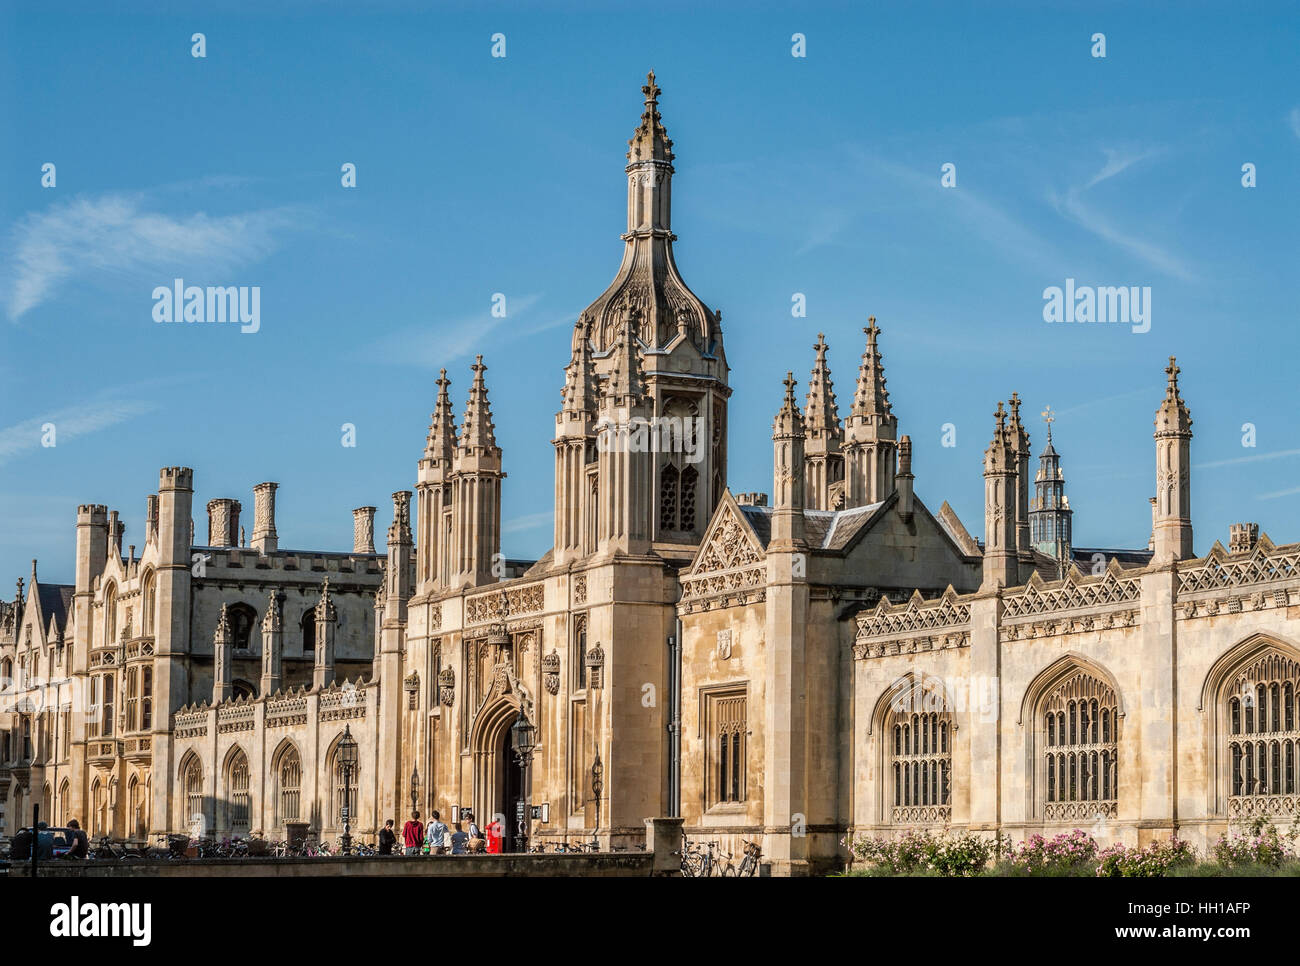 King's College Gate House in der Universitätsstadt Cambridge, England Stockfoto